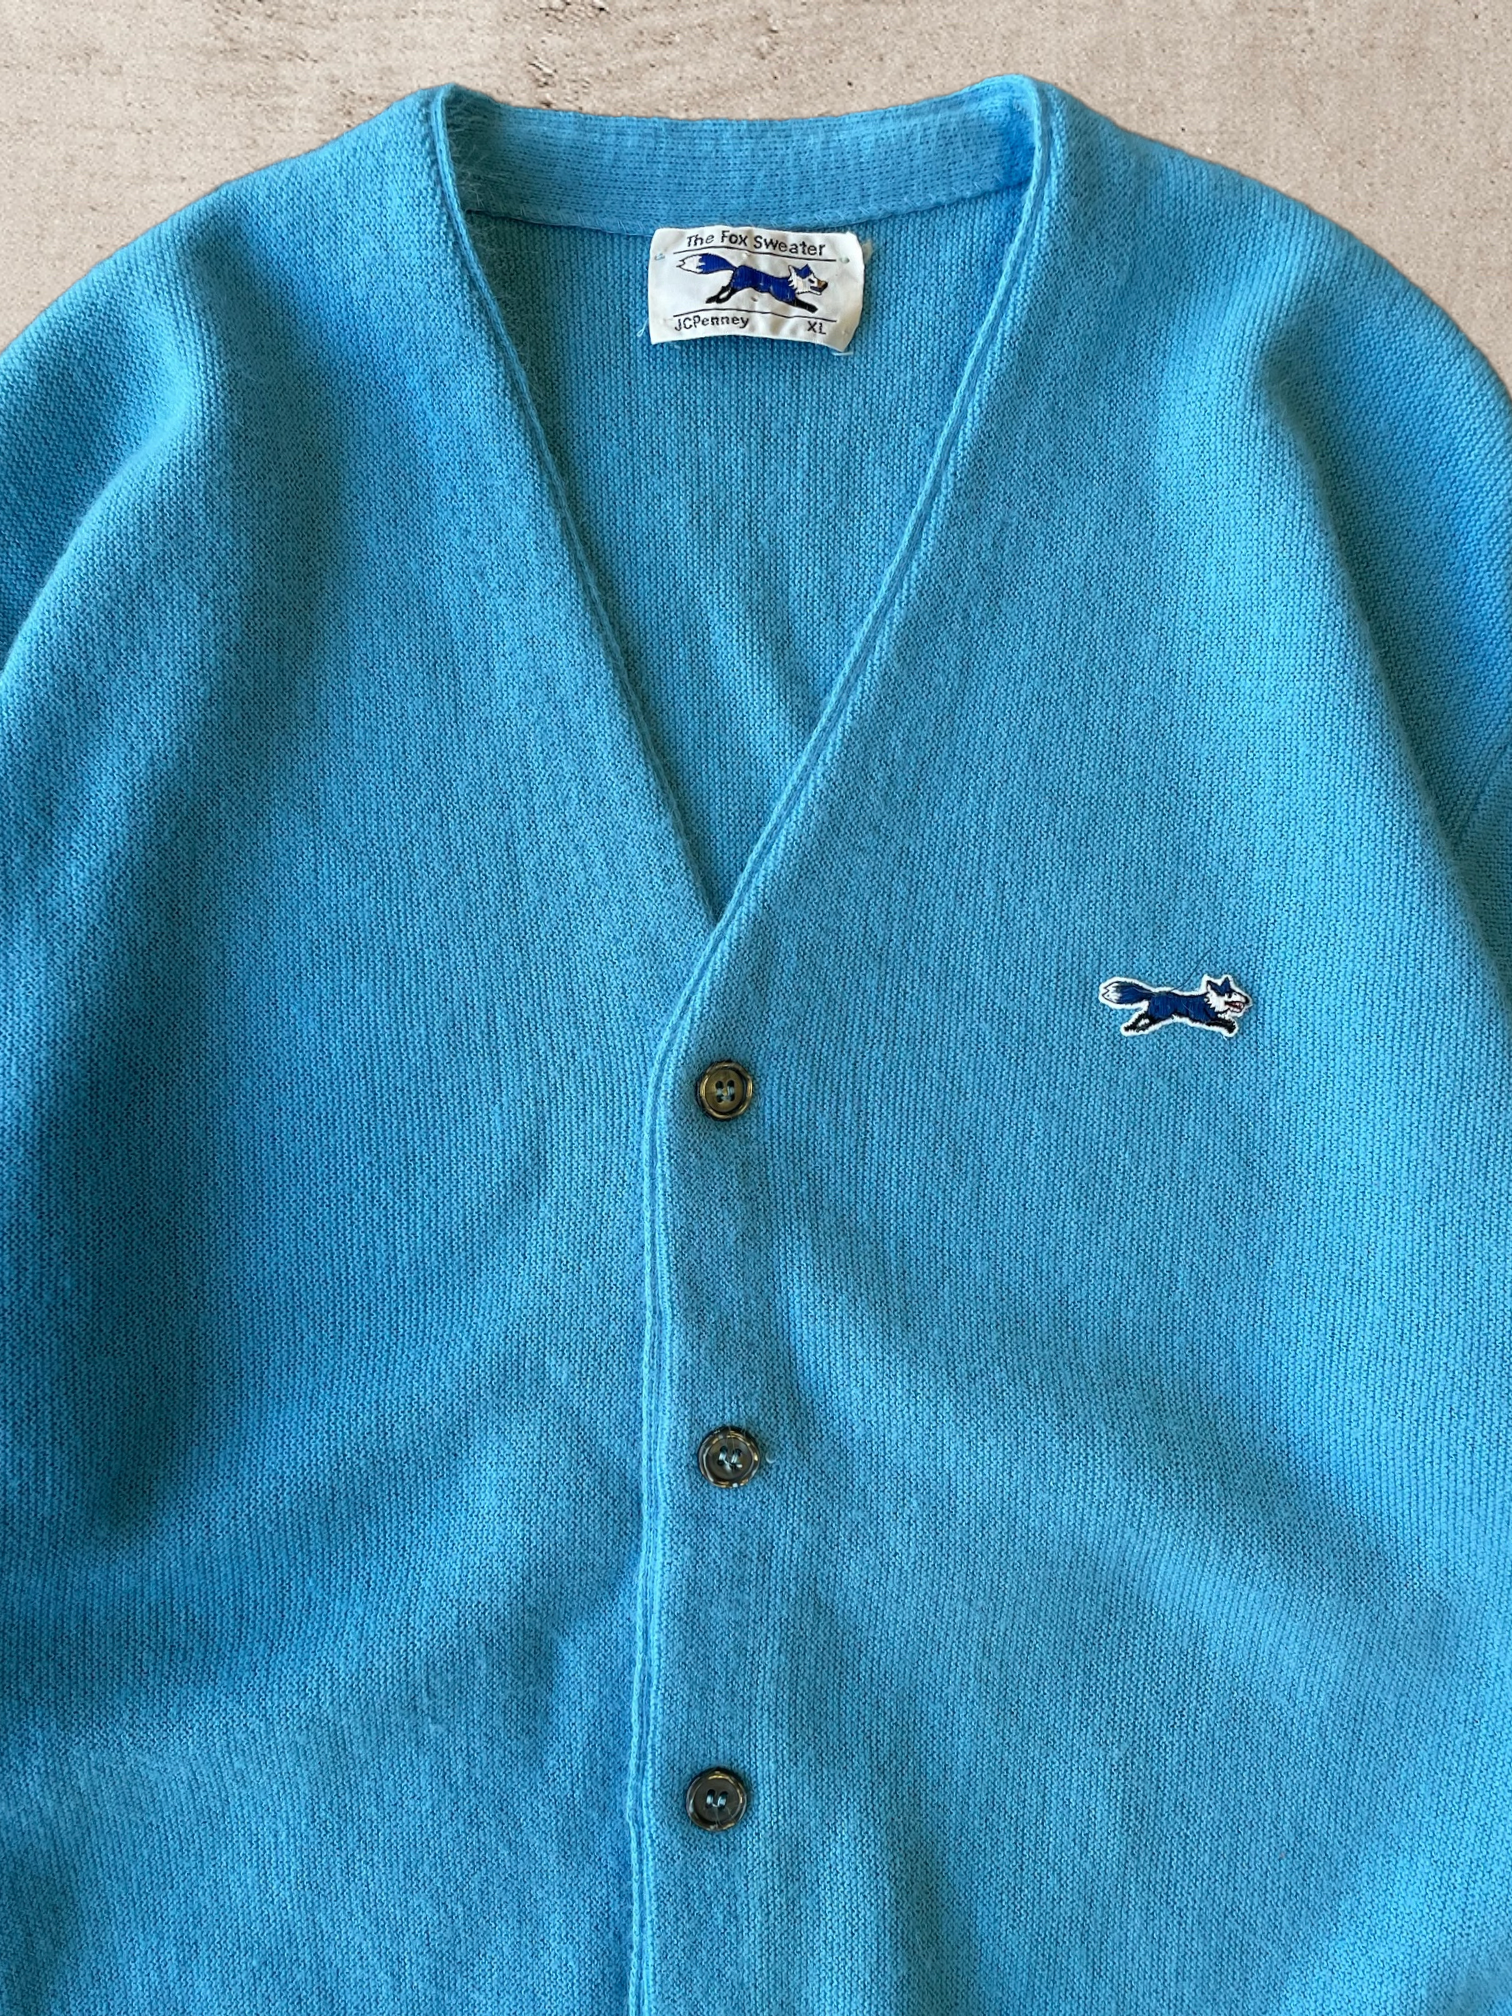 70s Baby Blue Cardigan - Large